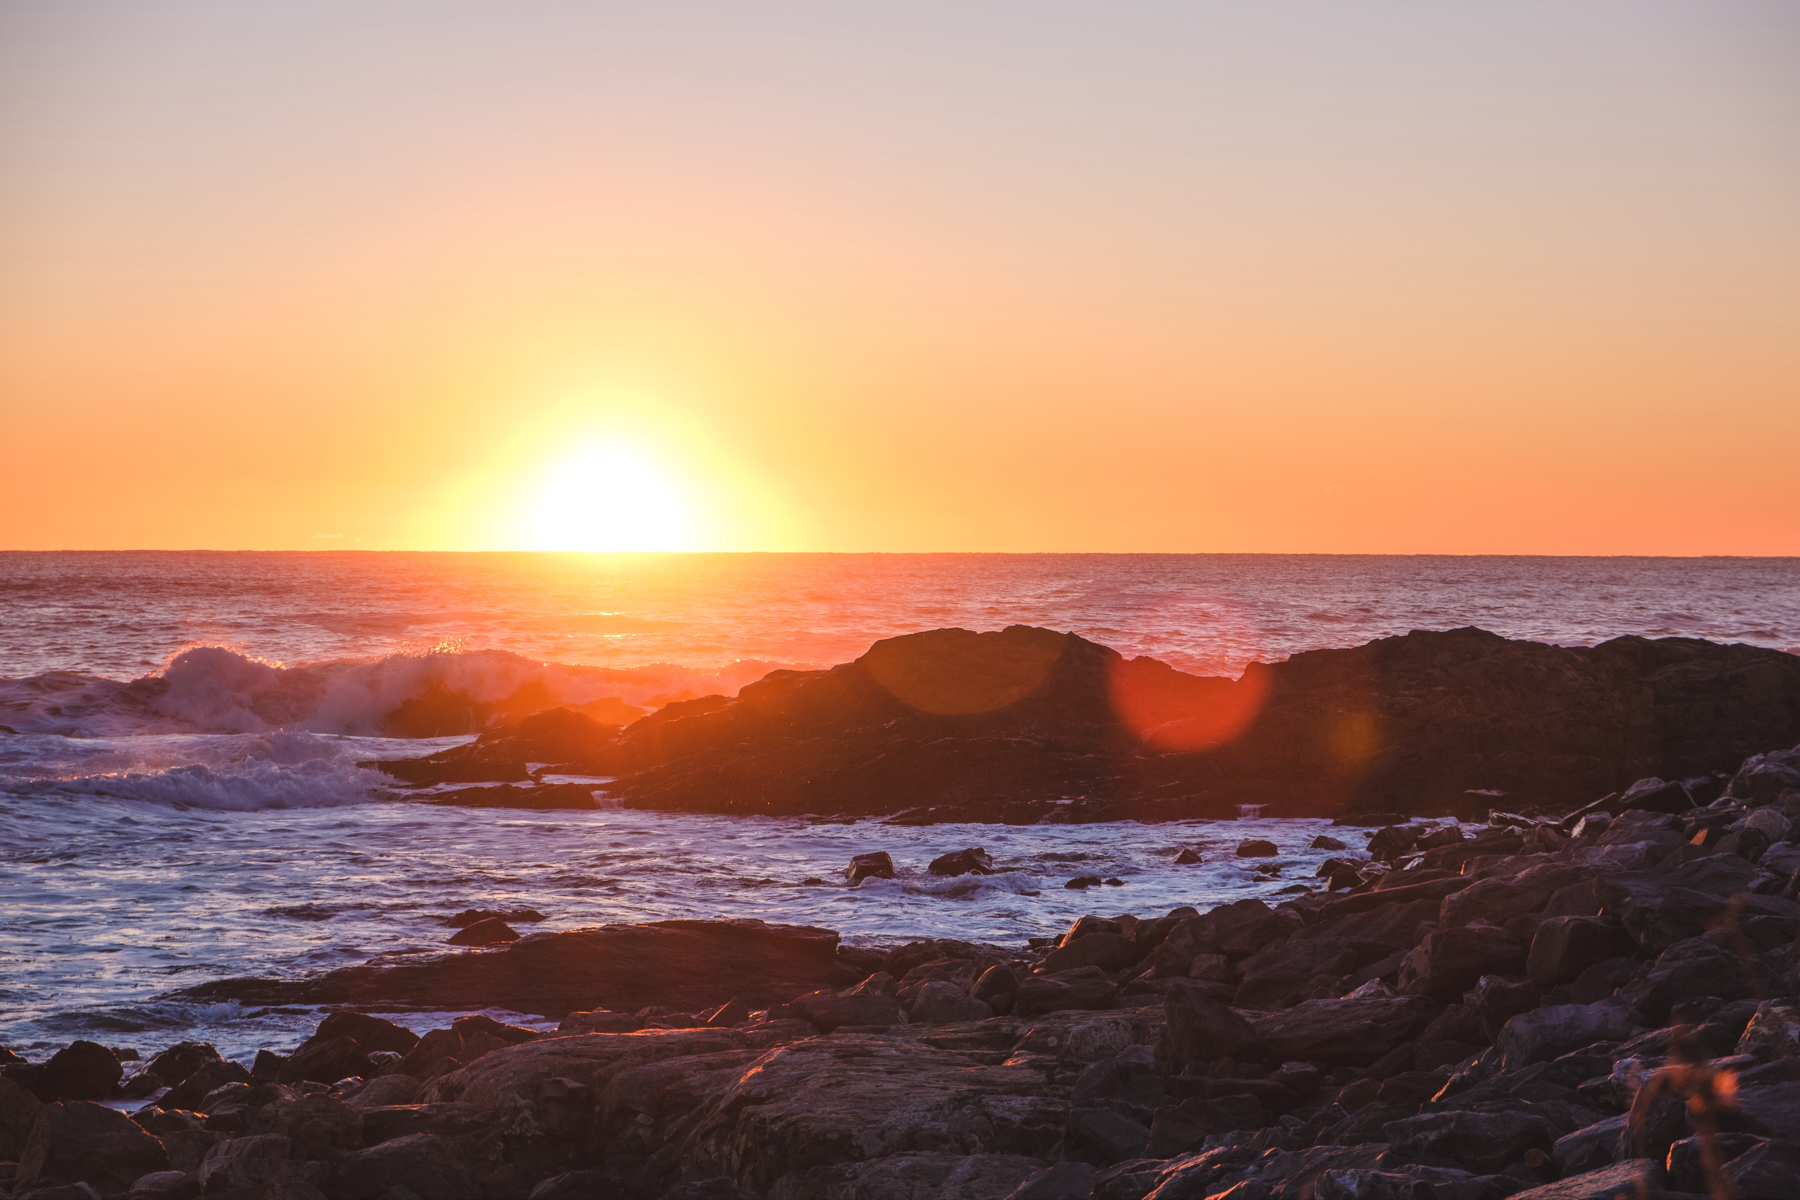 Sunrise over a rocky coastline with waves crashing against the rocks and a warm orange sky.